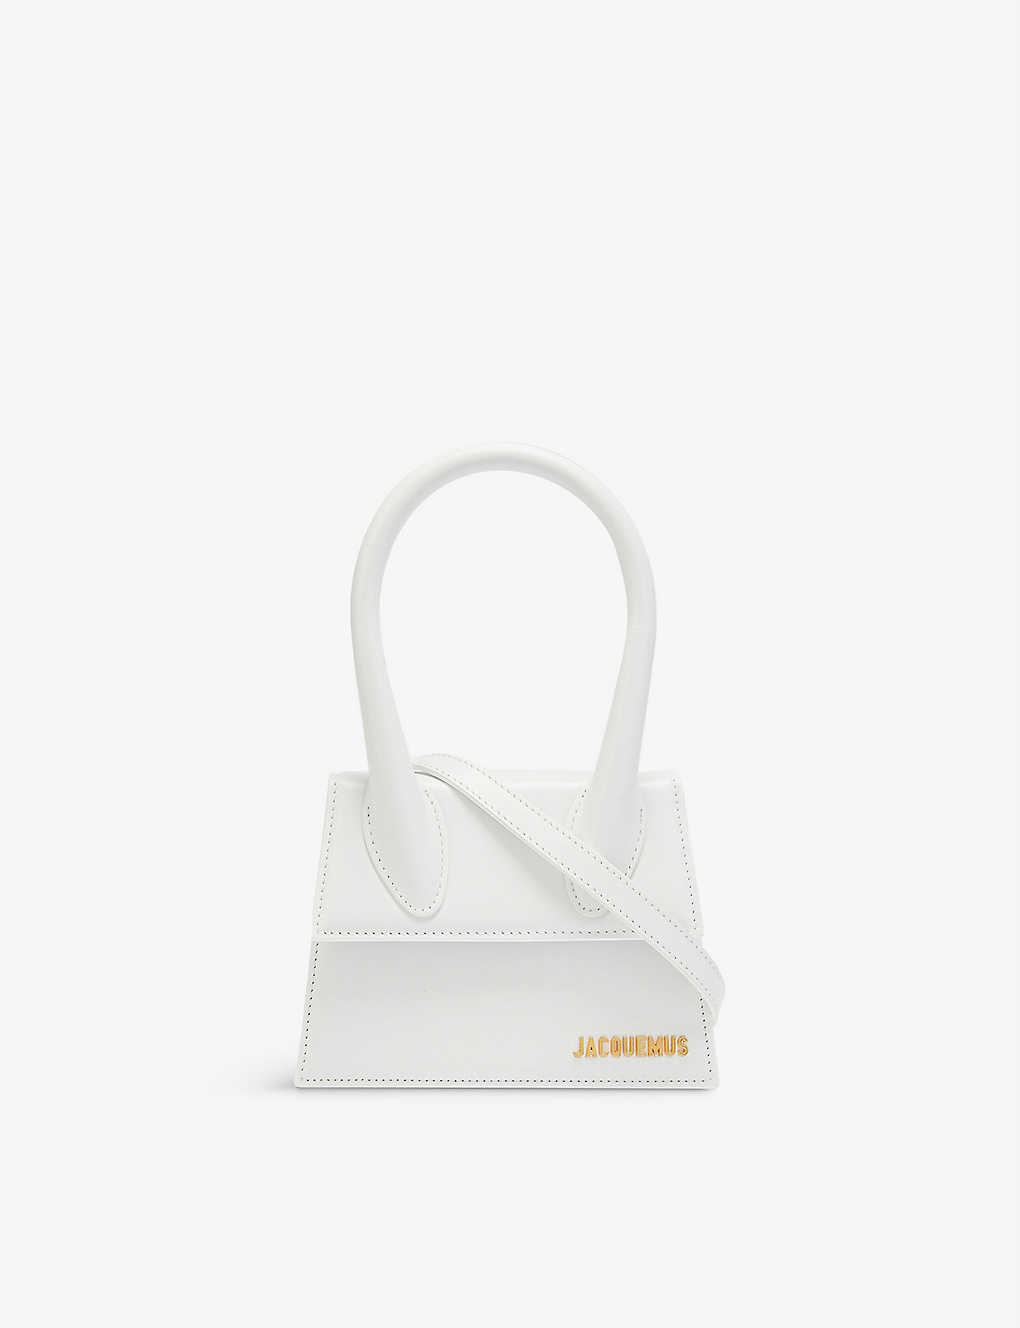 Jacquemus Le Chiquito Medium Leather Top Handle Bag In White